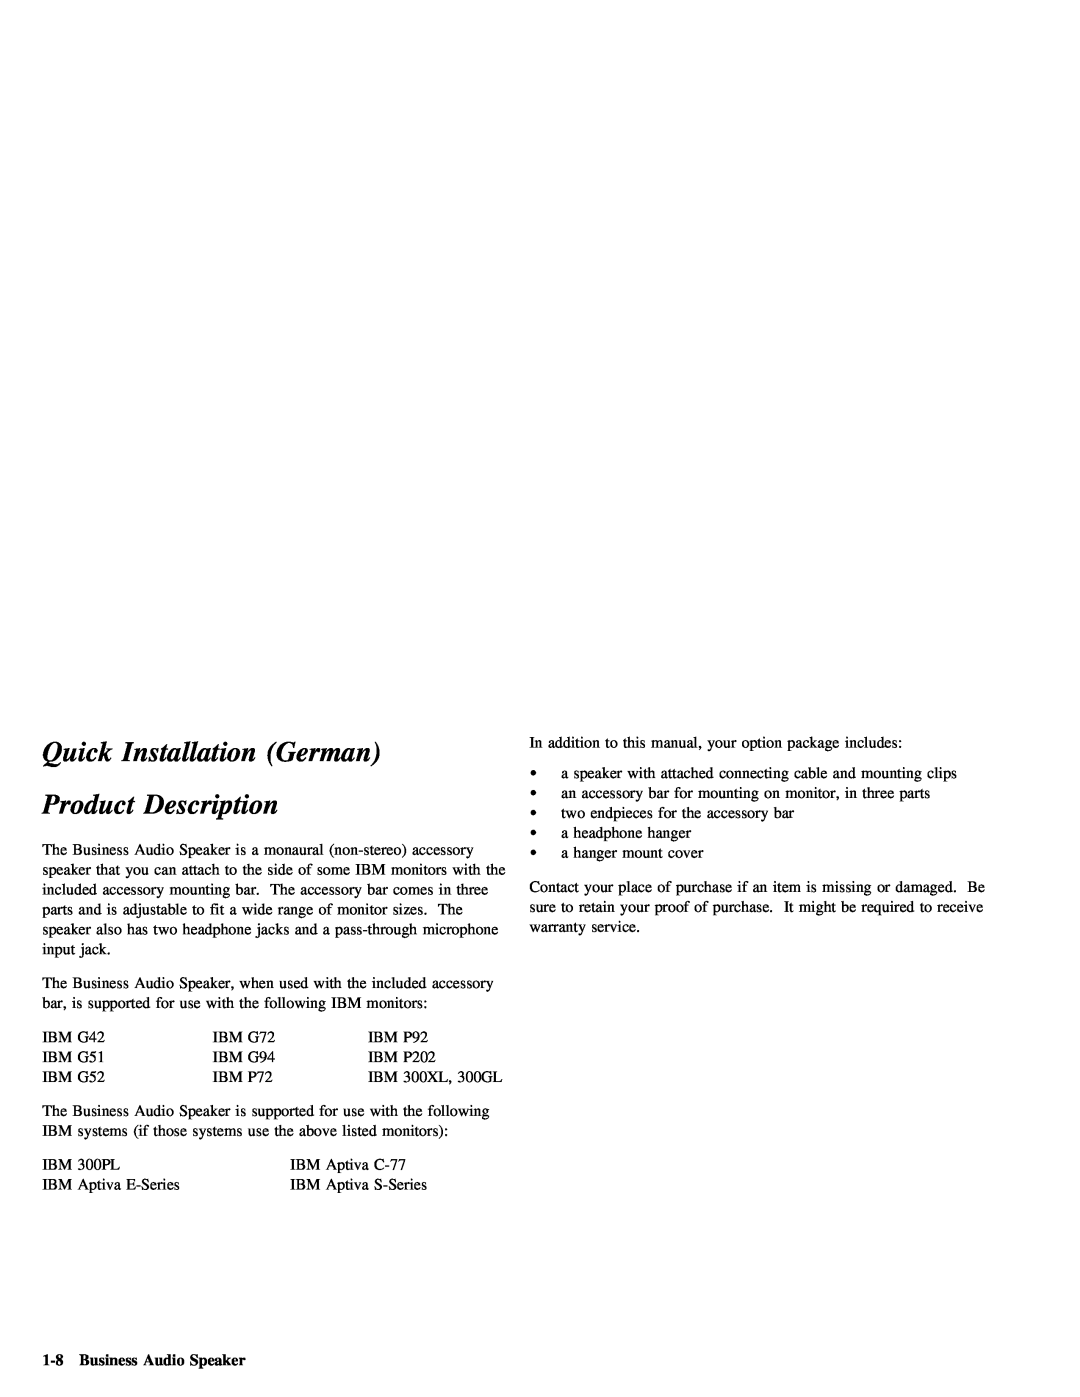 IBM 05L1596 manual Quick Installation German, Description, Product, 1-8Business Audio Speaker 